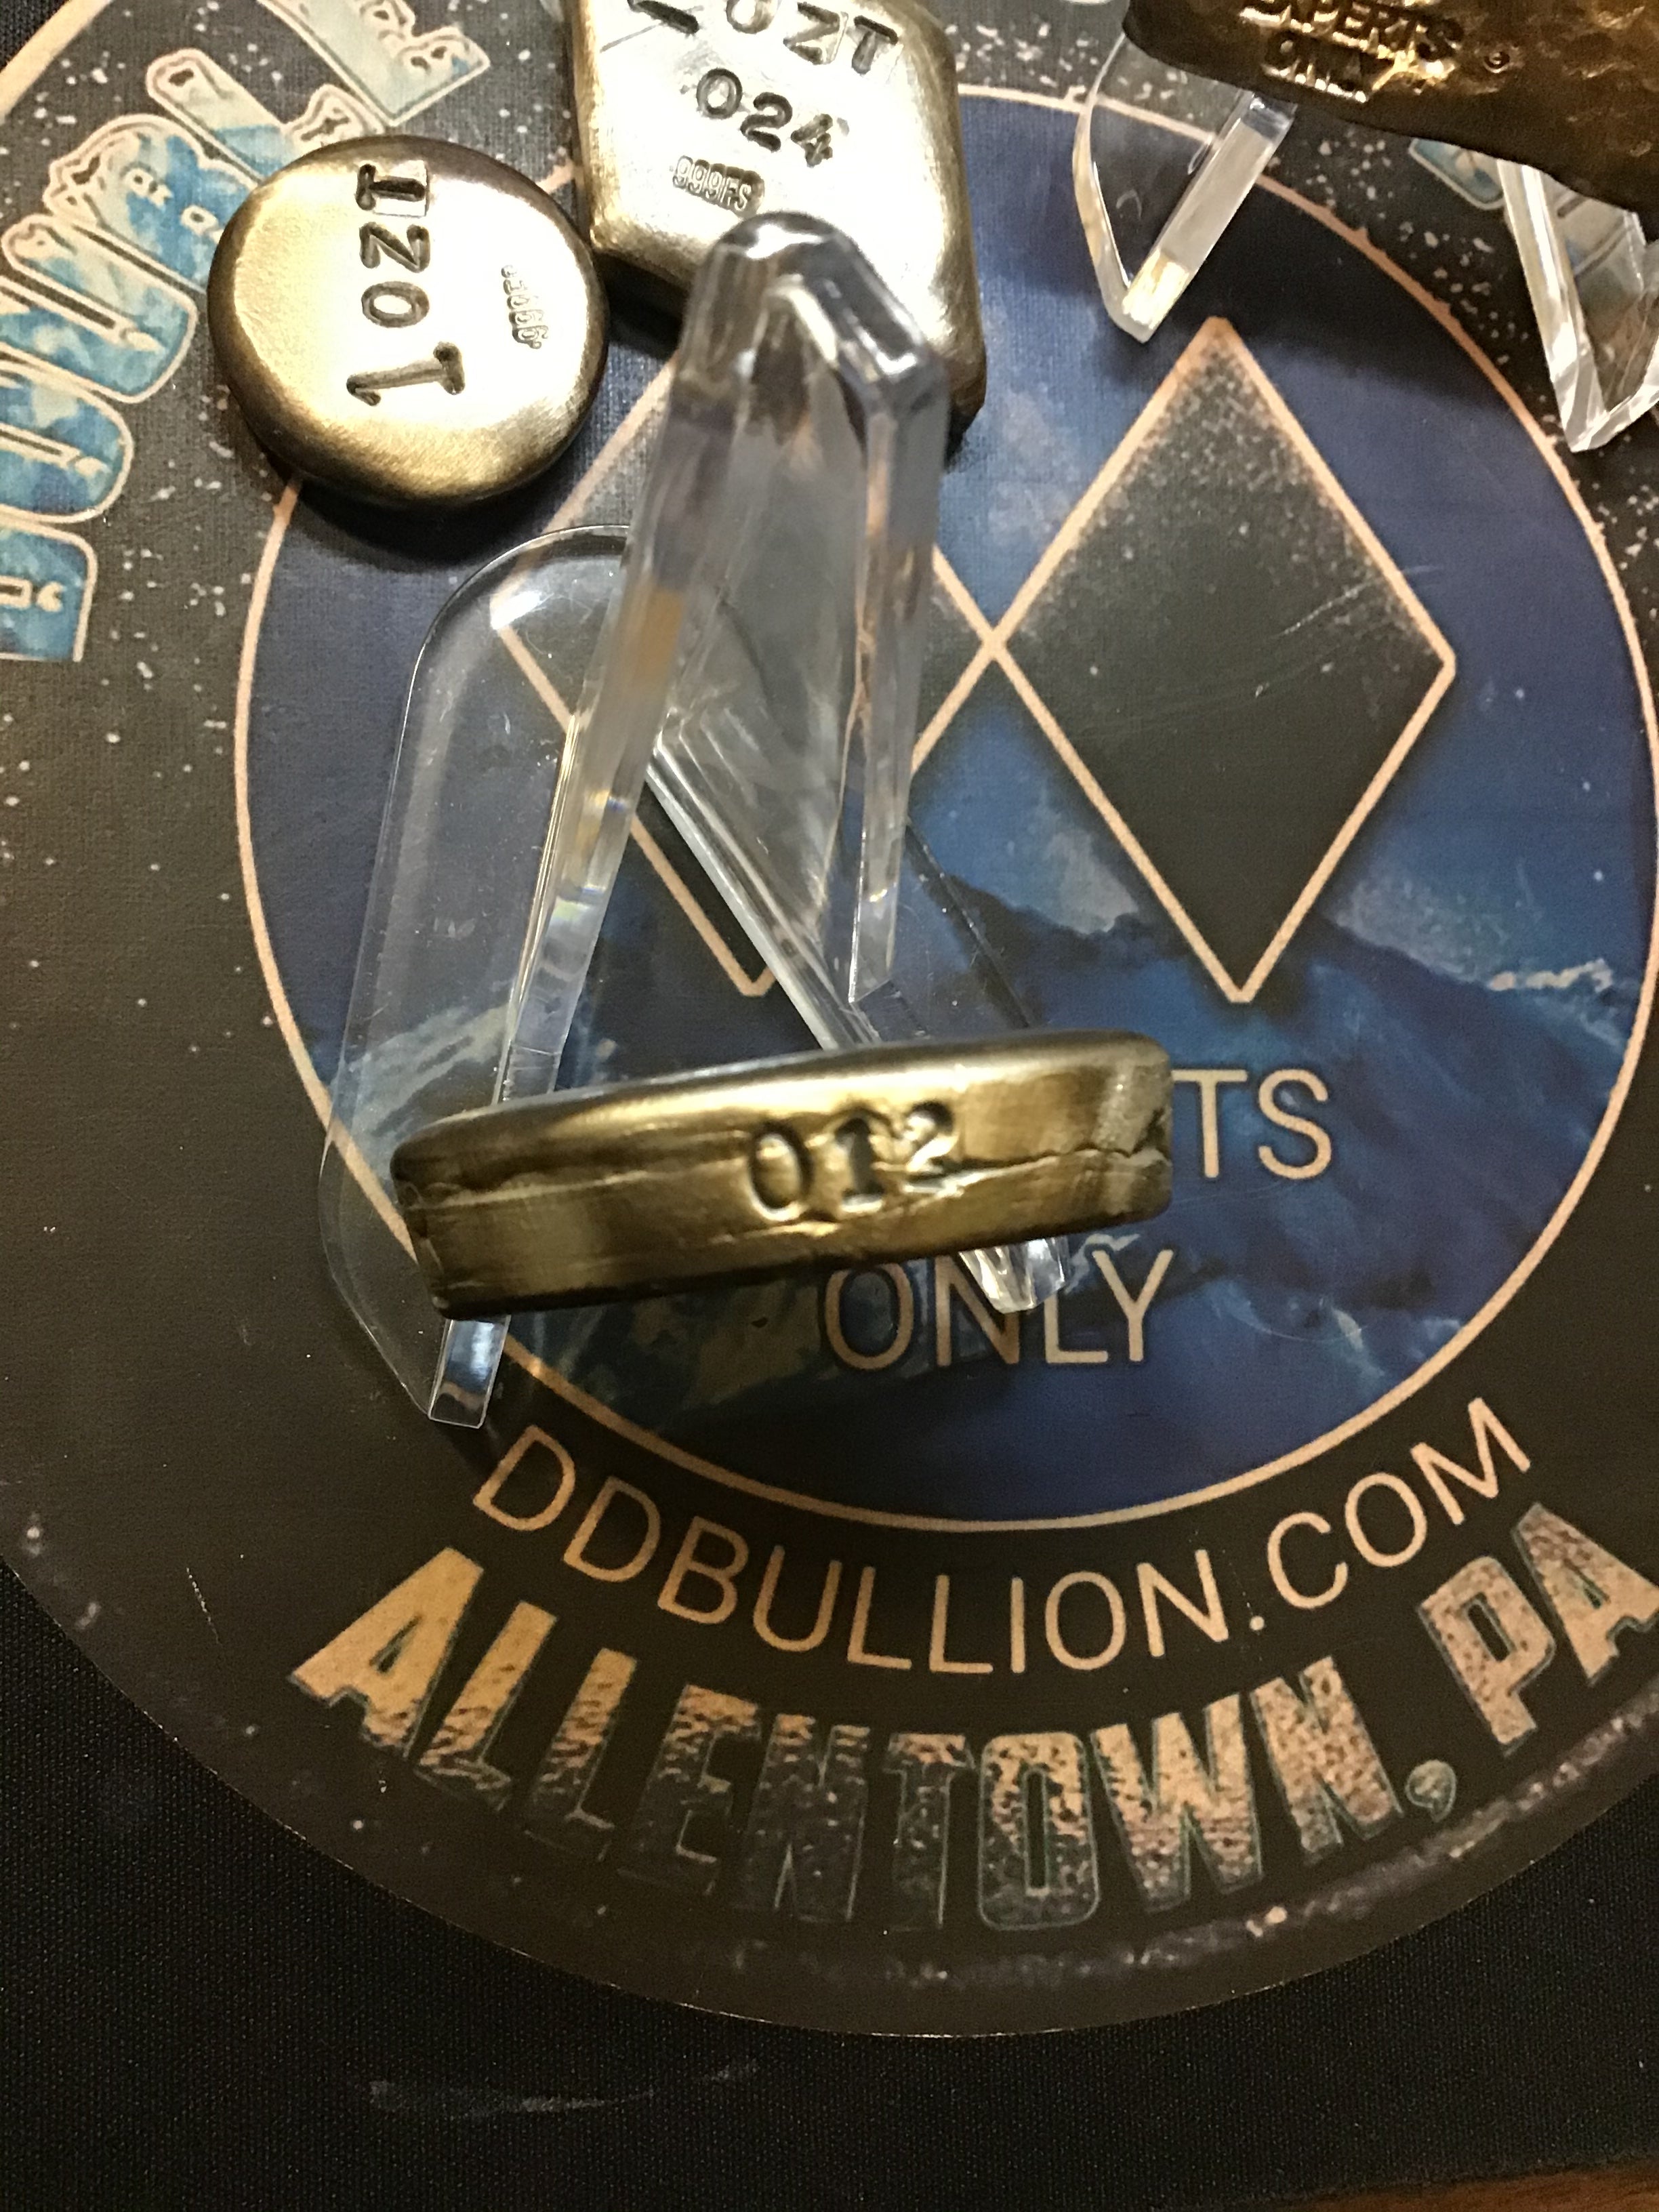 Double Diamond Bullion “Experts Only” 5 oz. Boulder Chunk Silver Round